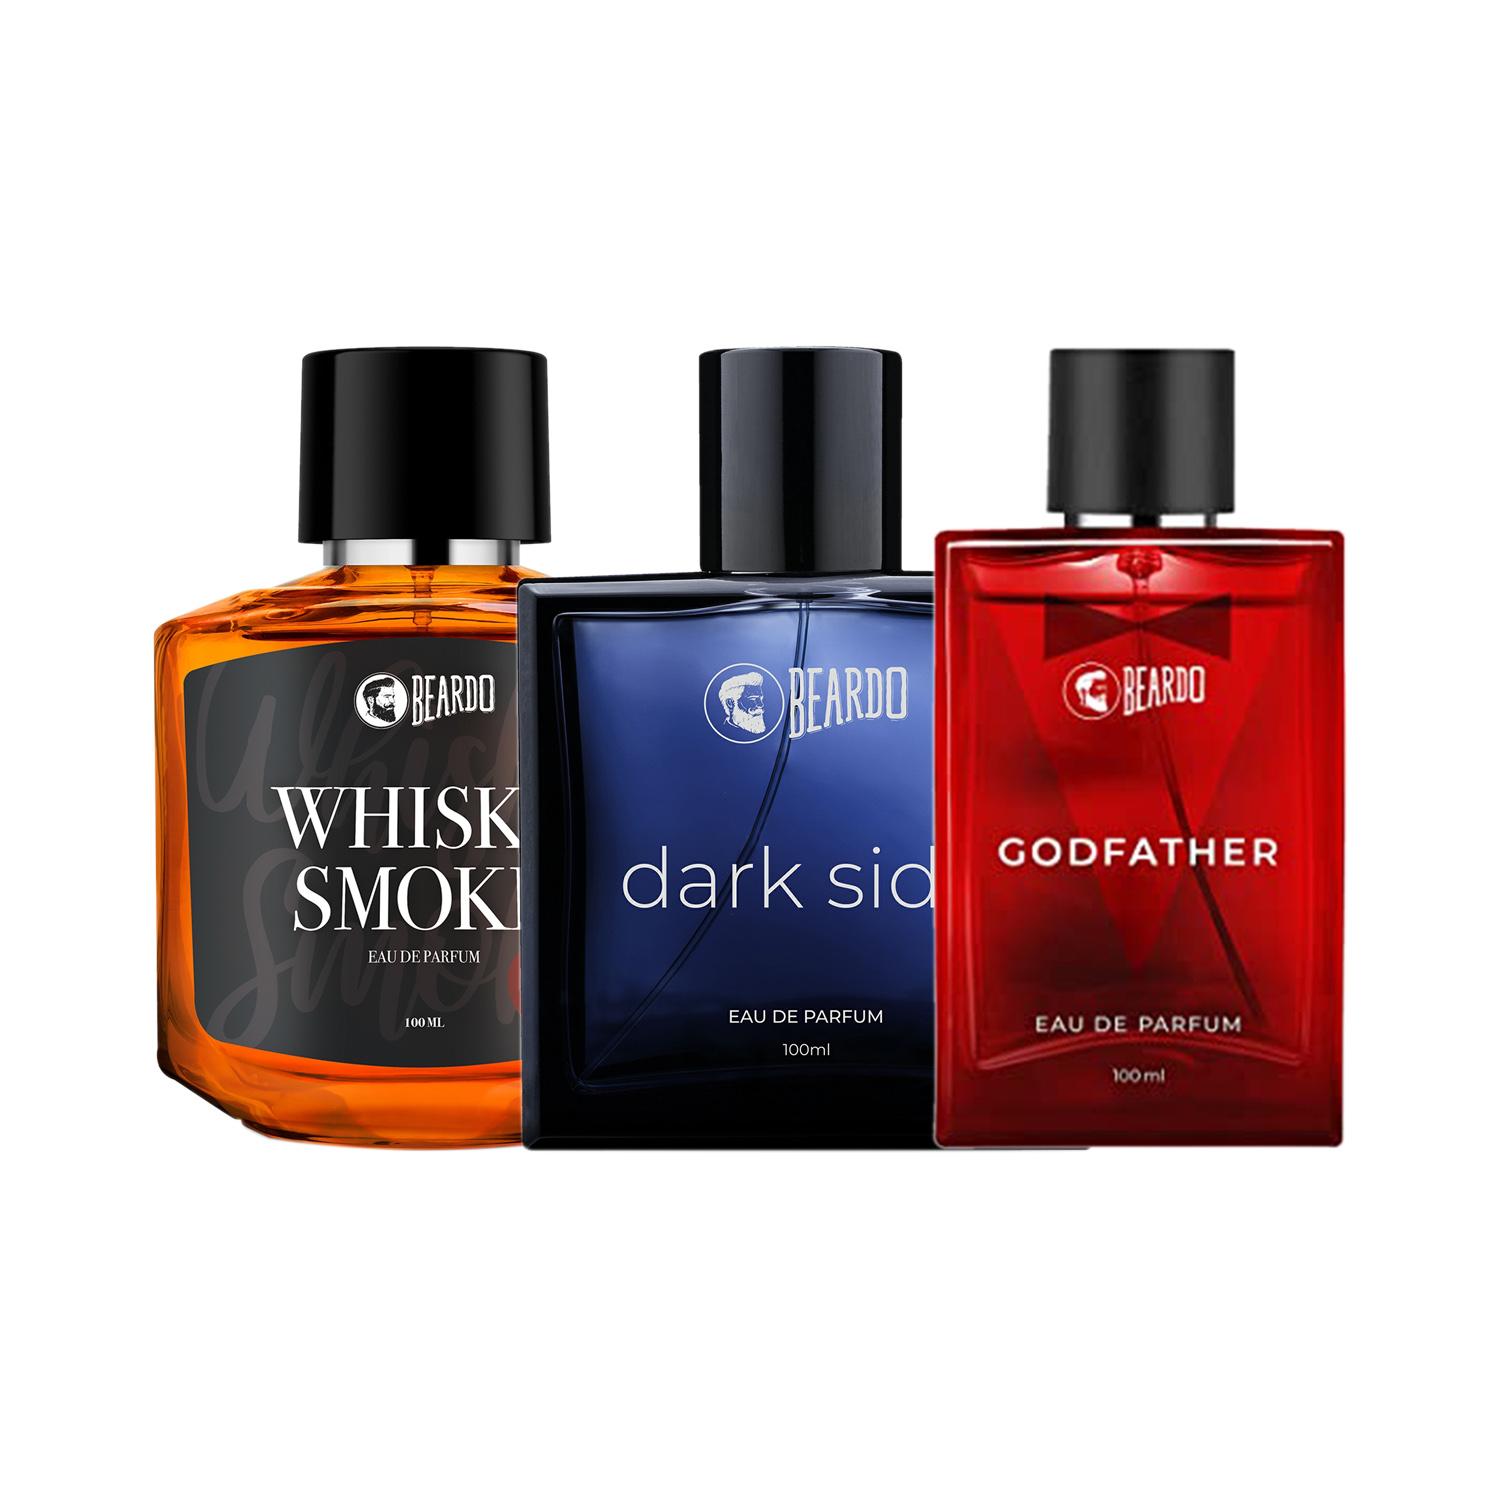 Beardo Whiskey Smoke Perfume, GodFather Perfume, Dark Side Perfume (Set of 3) Combo